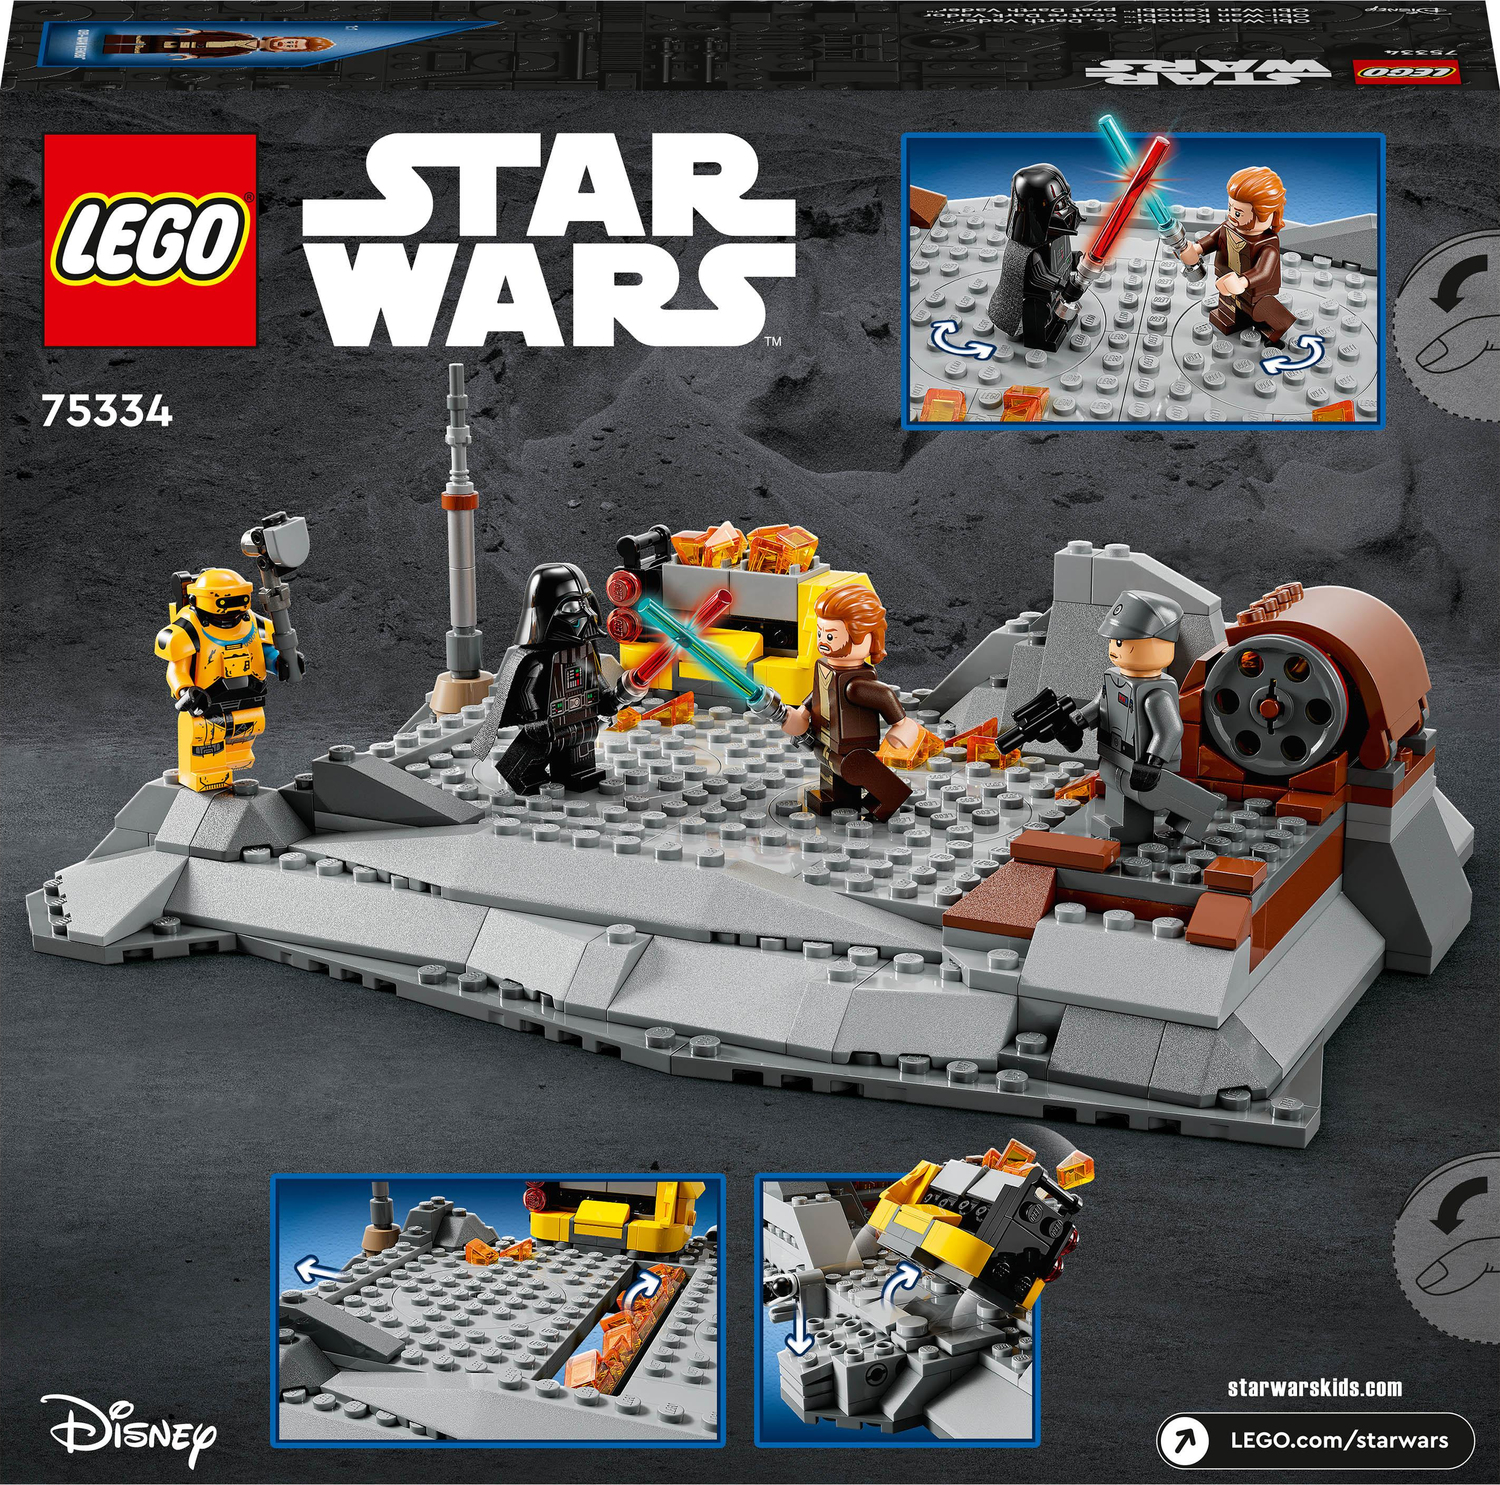 LEGO Star Wars Obi-Wan Kenobi vs. Darth Vader Set